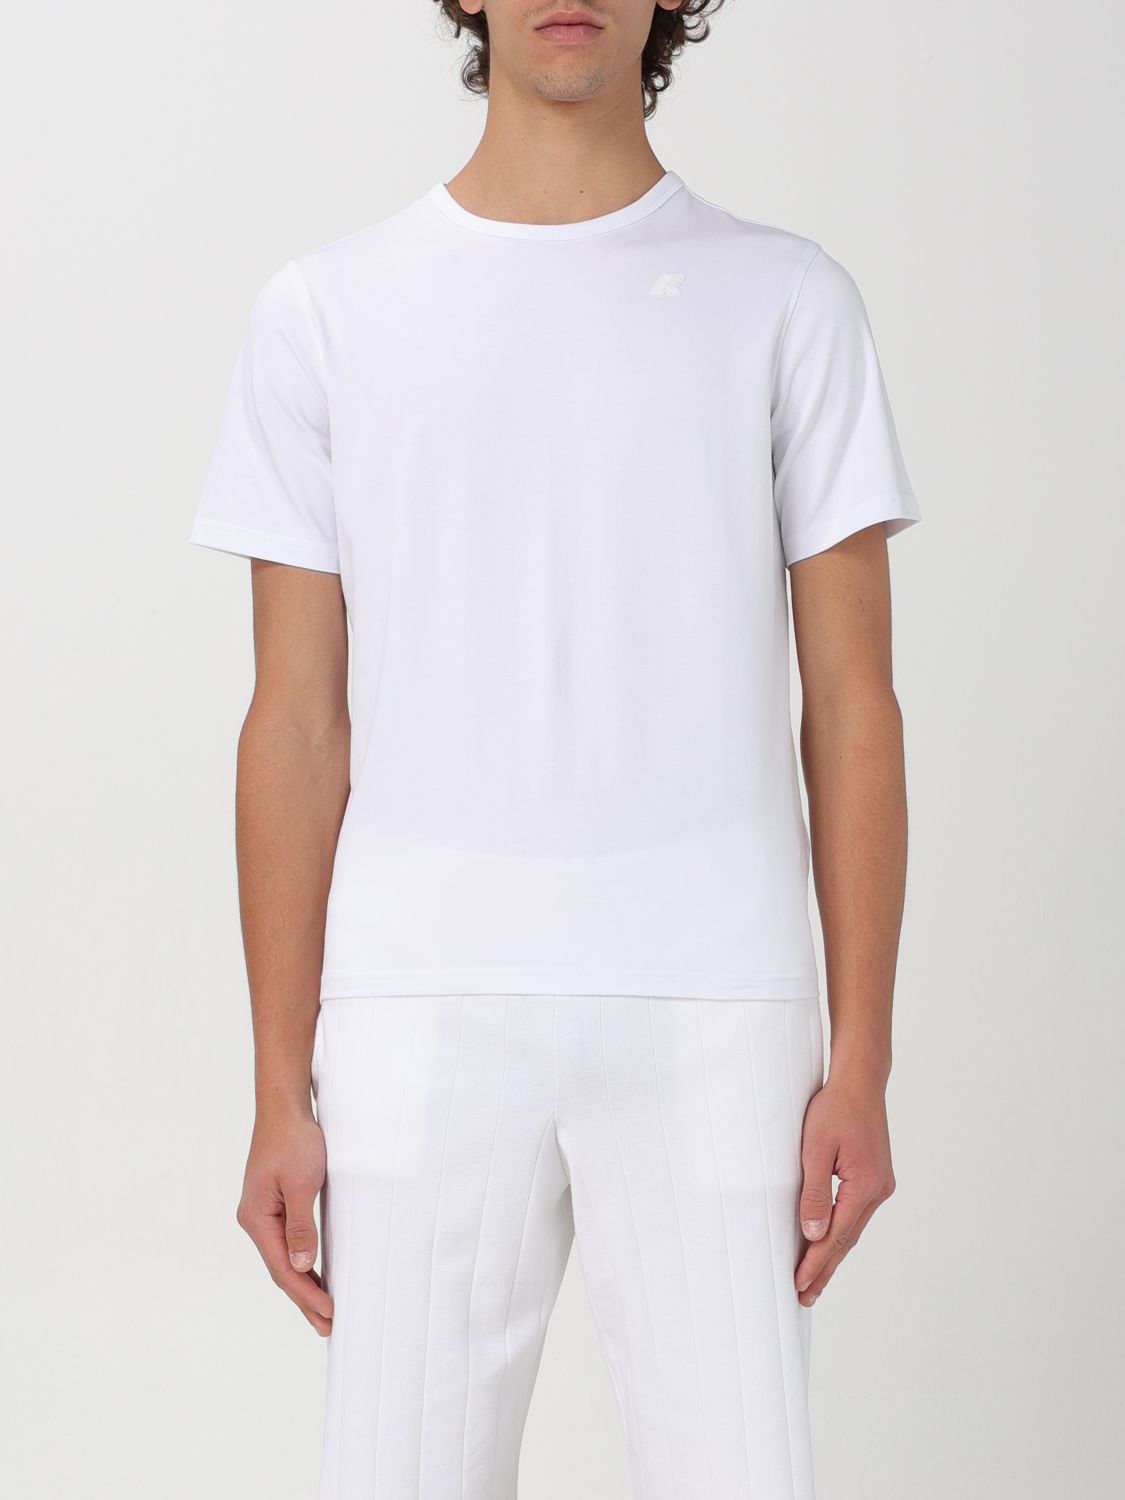 K-Way T-Shirt K-WAY Men color White